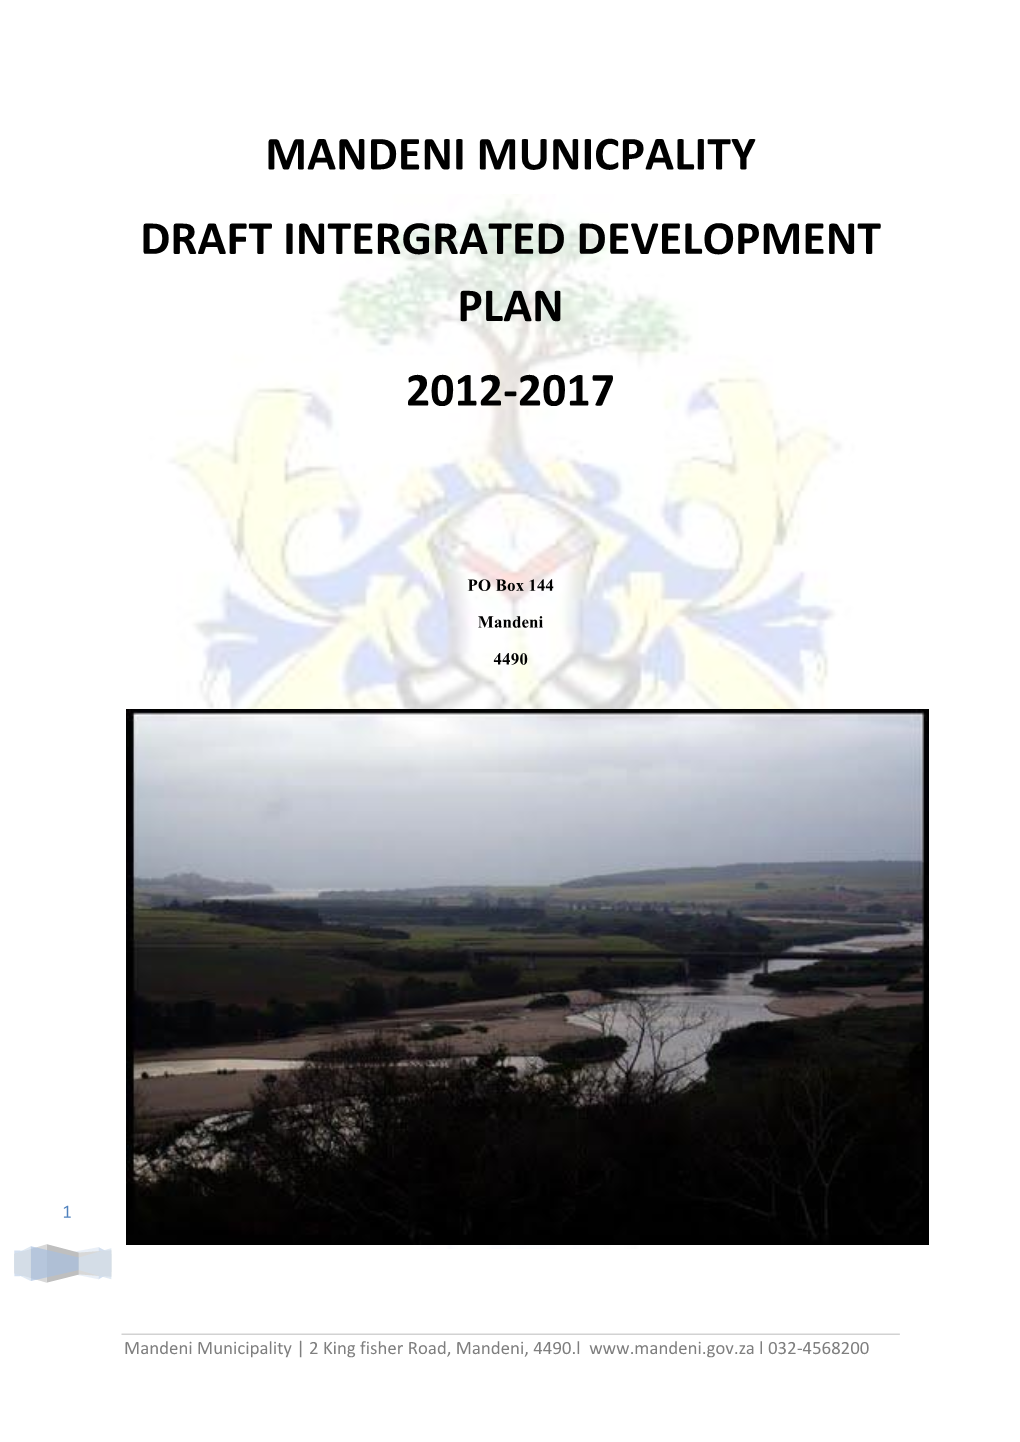 Mandeni Municpality Draft Intergrated Development Plan 2012-2017